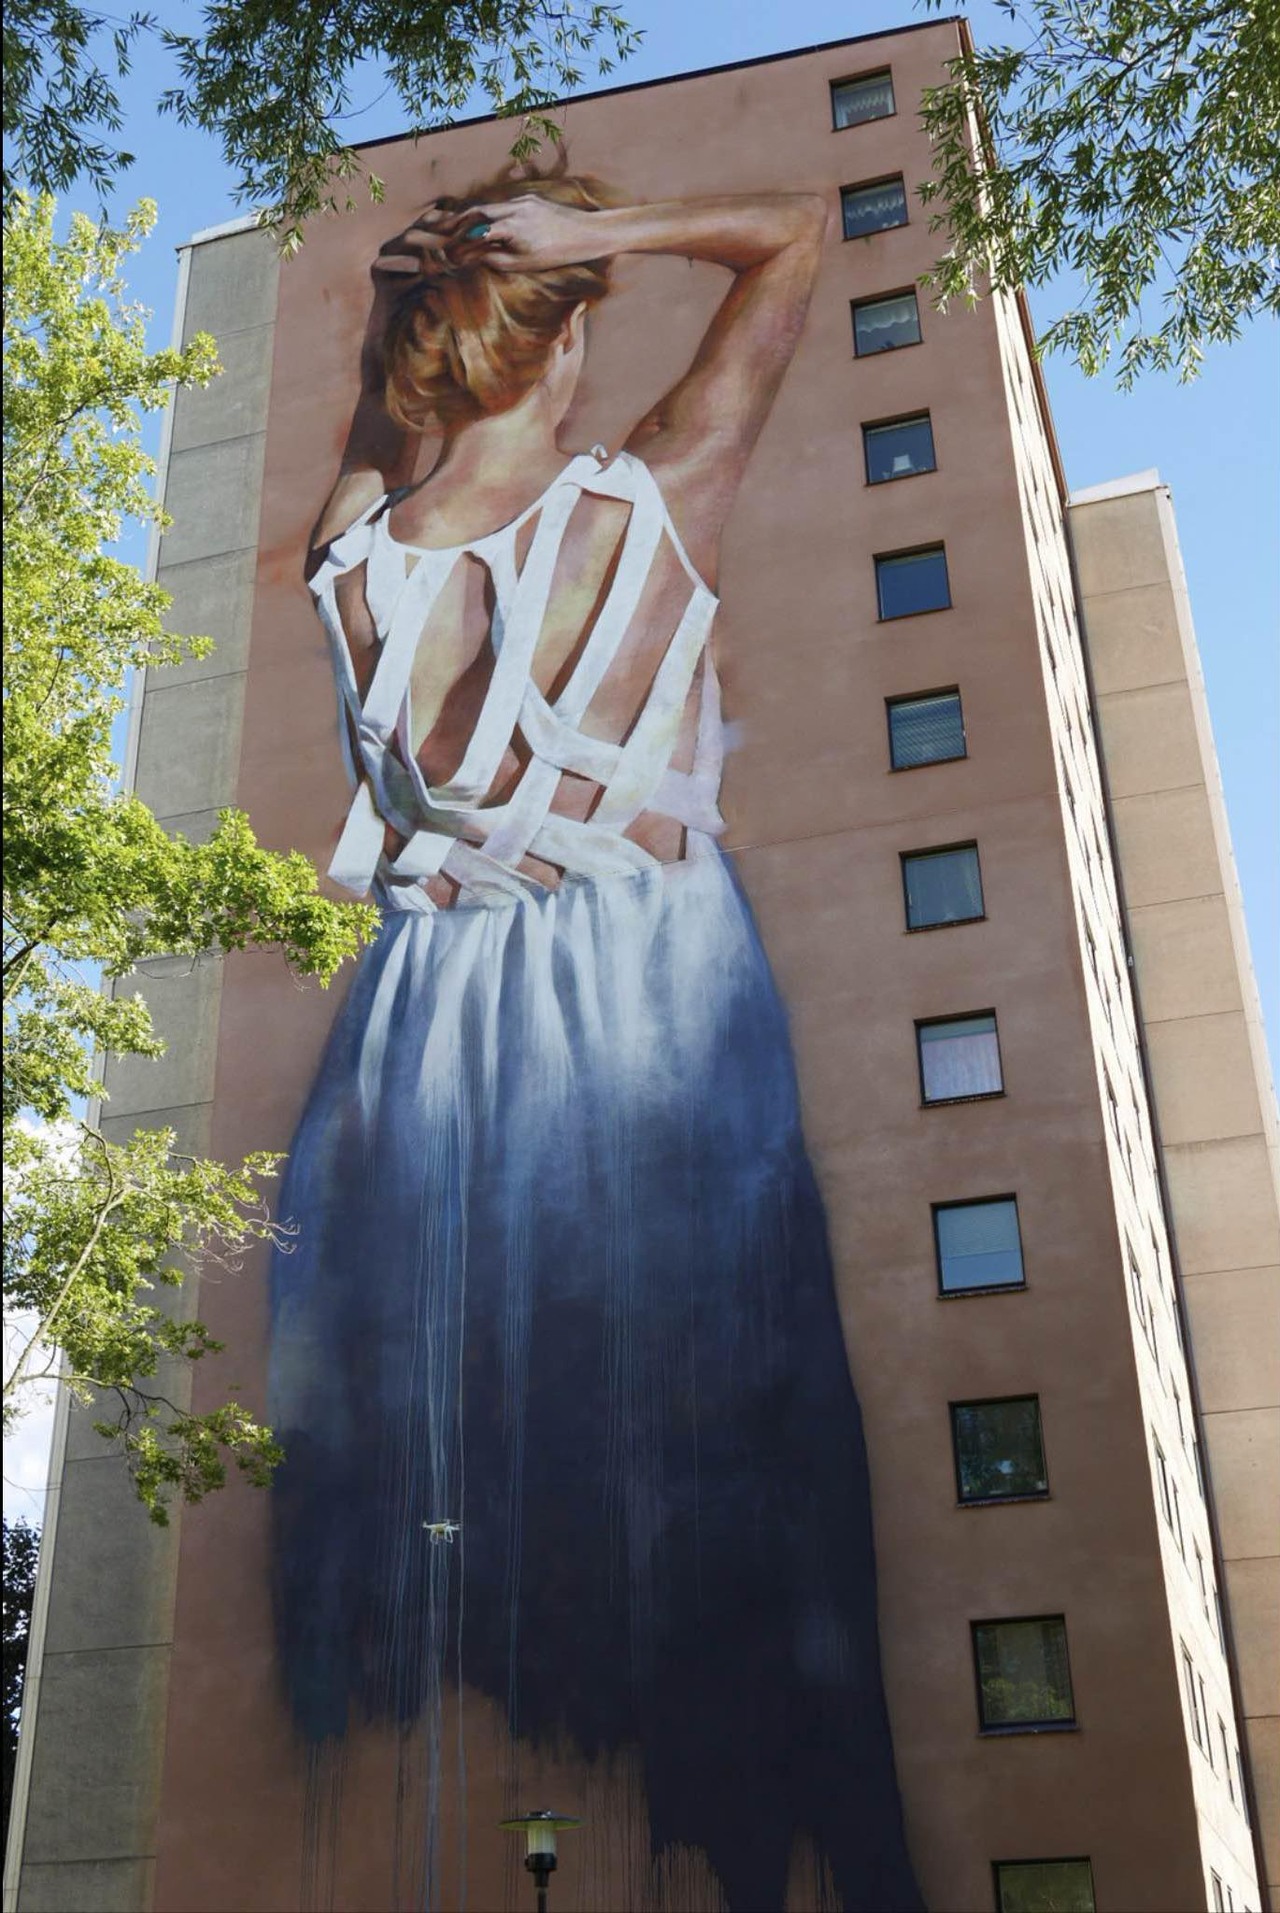 "Looking Back" | Impressive work by Emmanuel Jarus in Gothenburg, Sweden #streetart #urbanart #artderue #arturbain #artedistrada #arteurbana #artecallejero #arteurbano #graffiti #emmanueljarus #gothenburg #sweden #sverige   via StreetArtNews | https://goo.gl/WhcQ27 https://t.co/RaHts45W6I